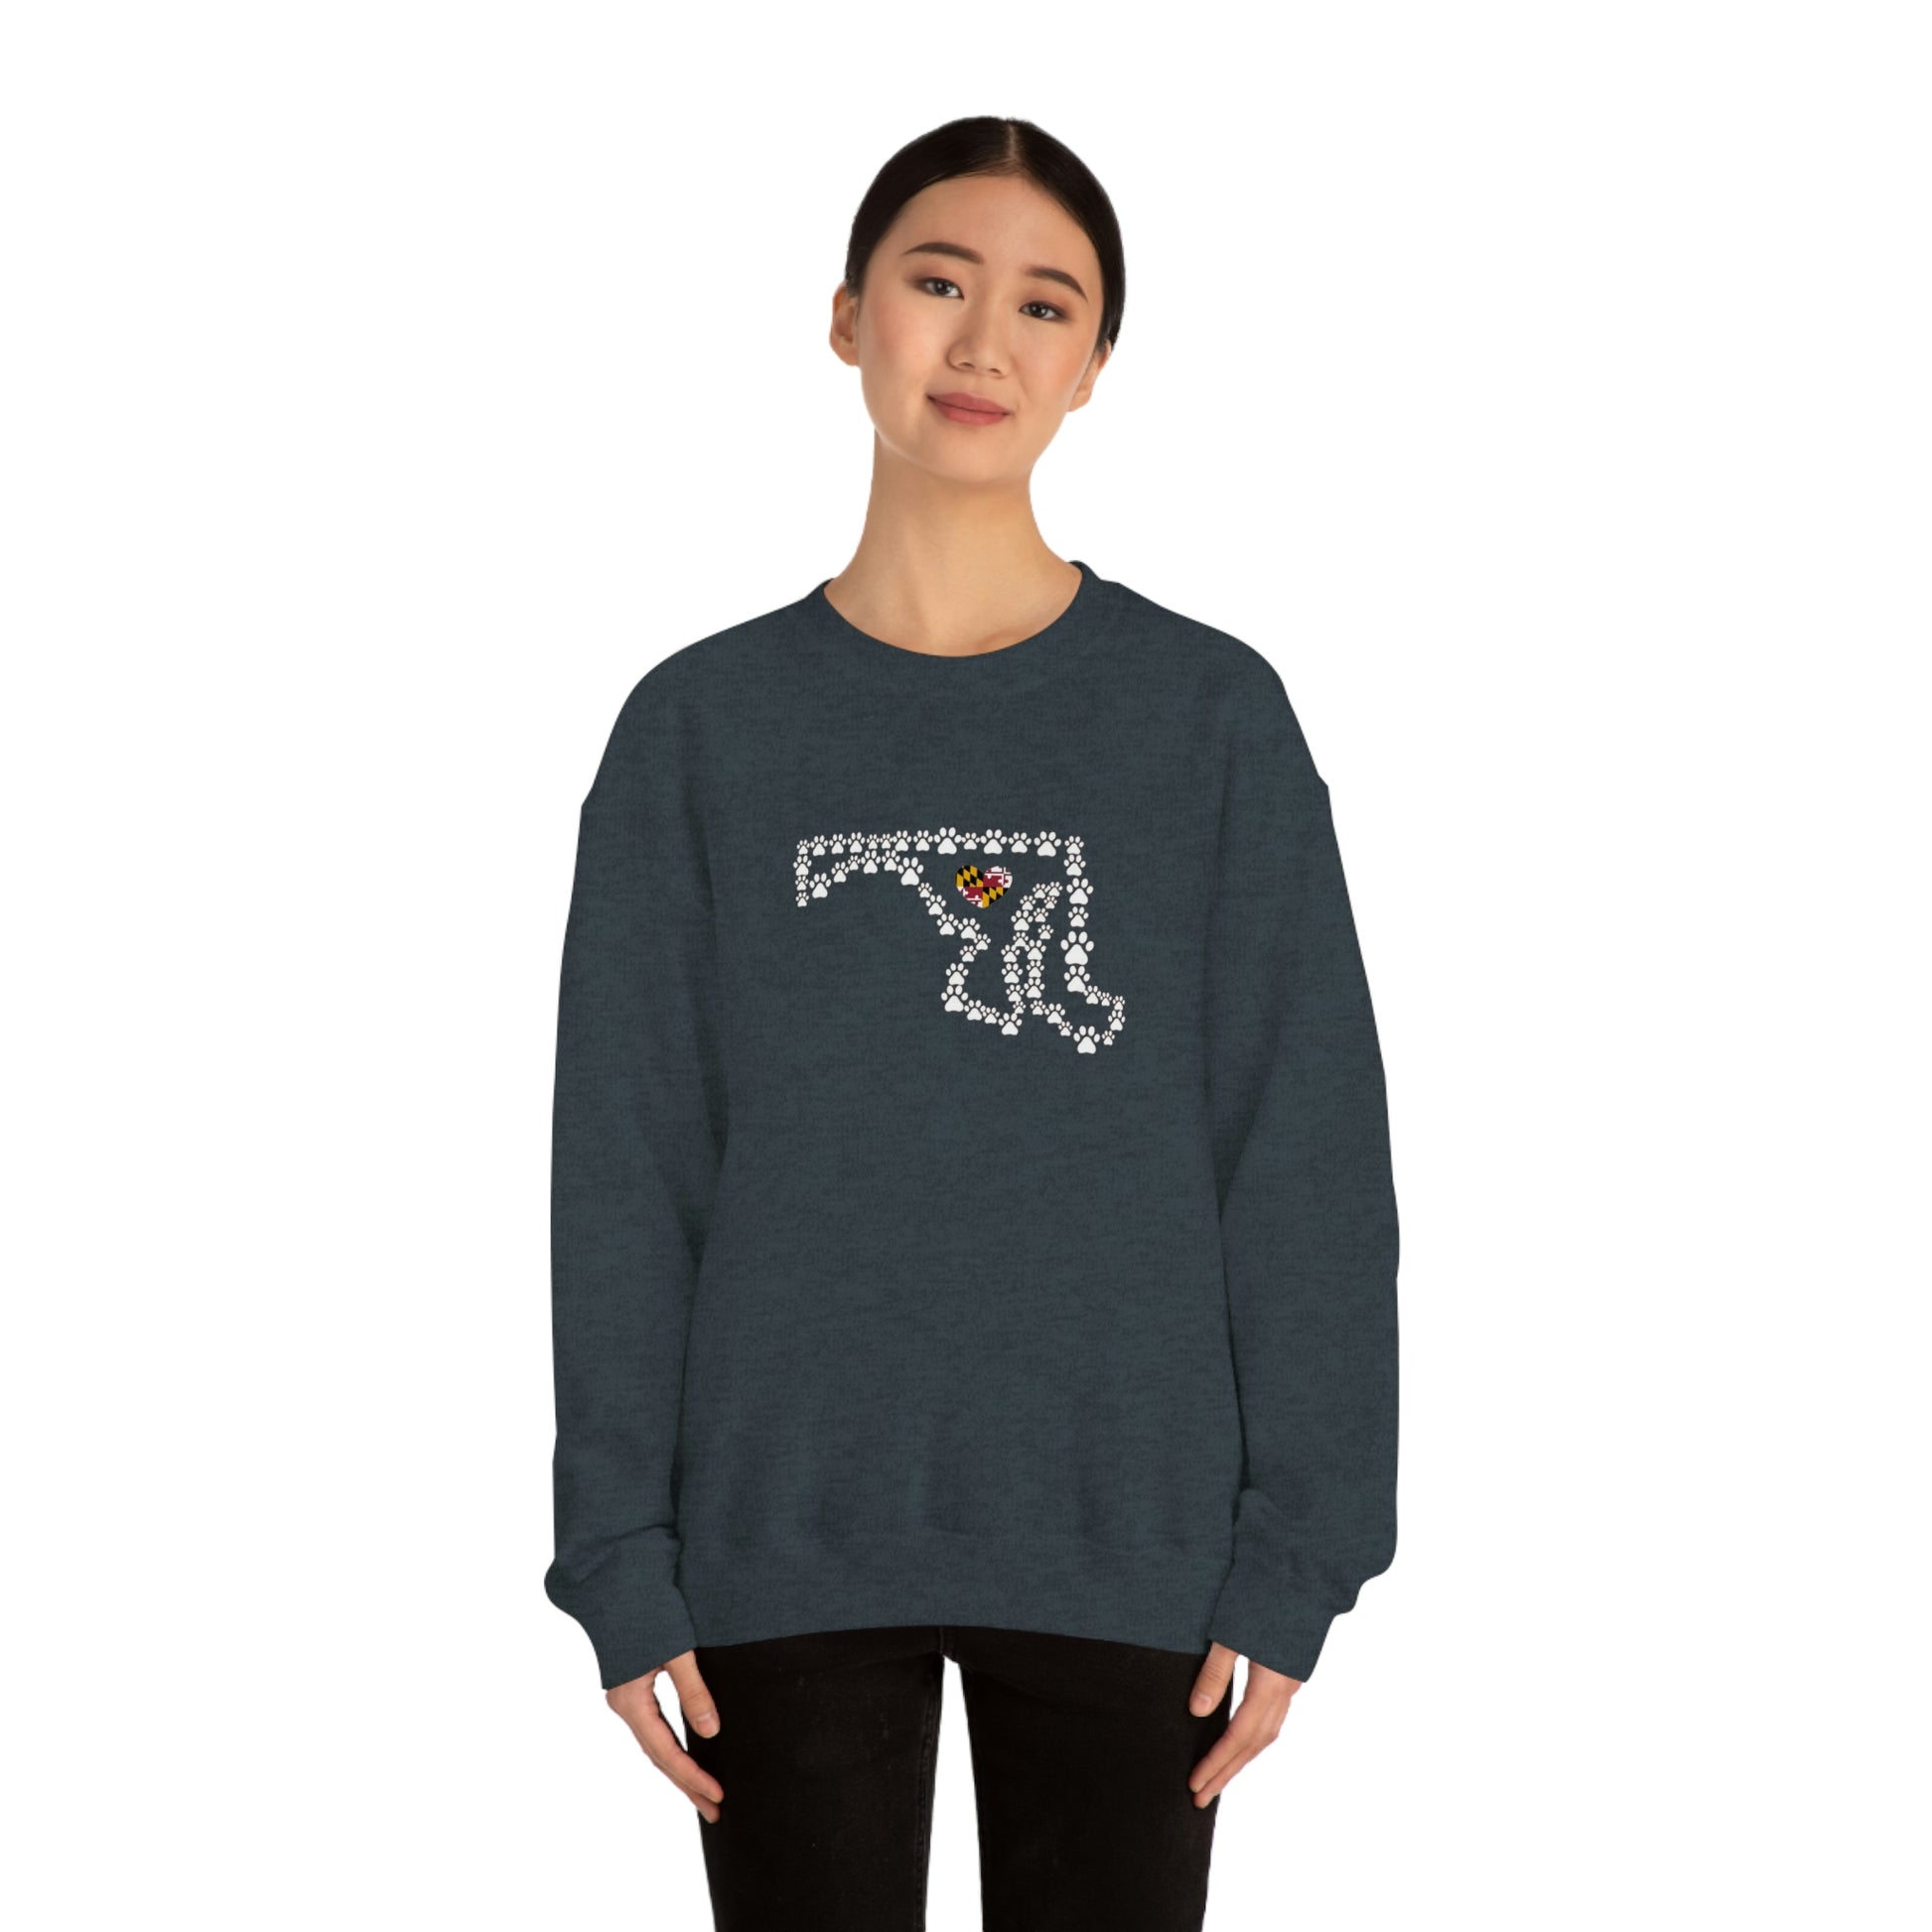 Modal-blend sweatshirt with logo print